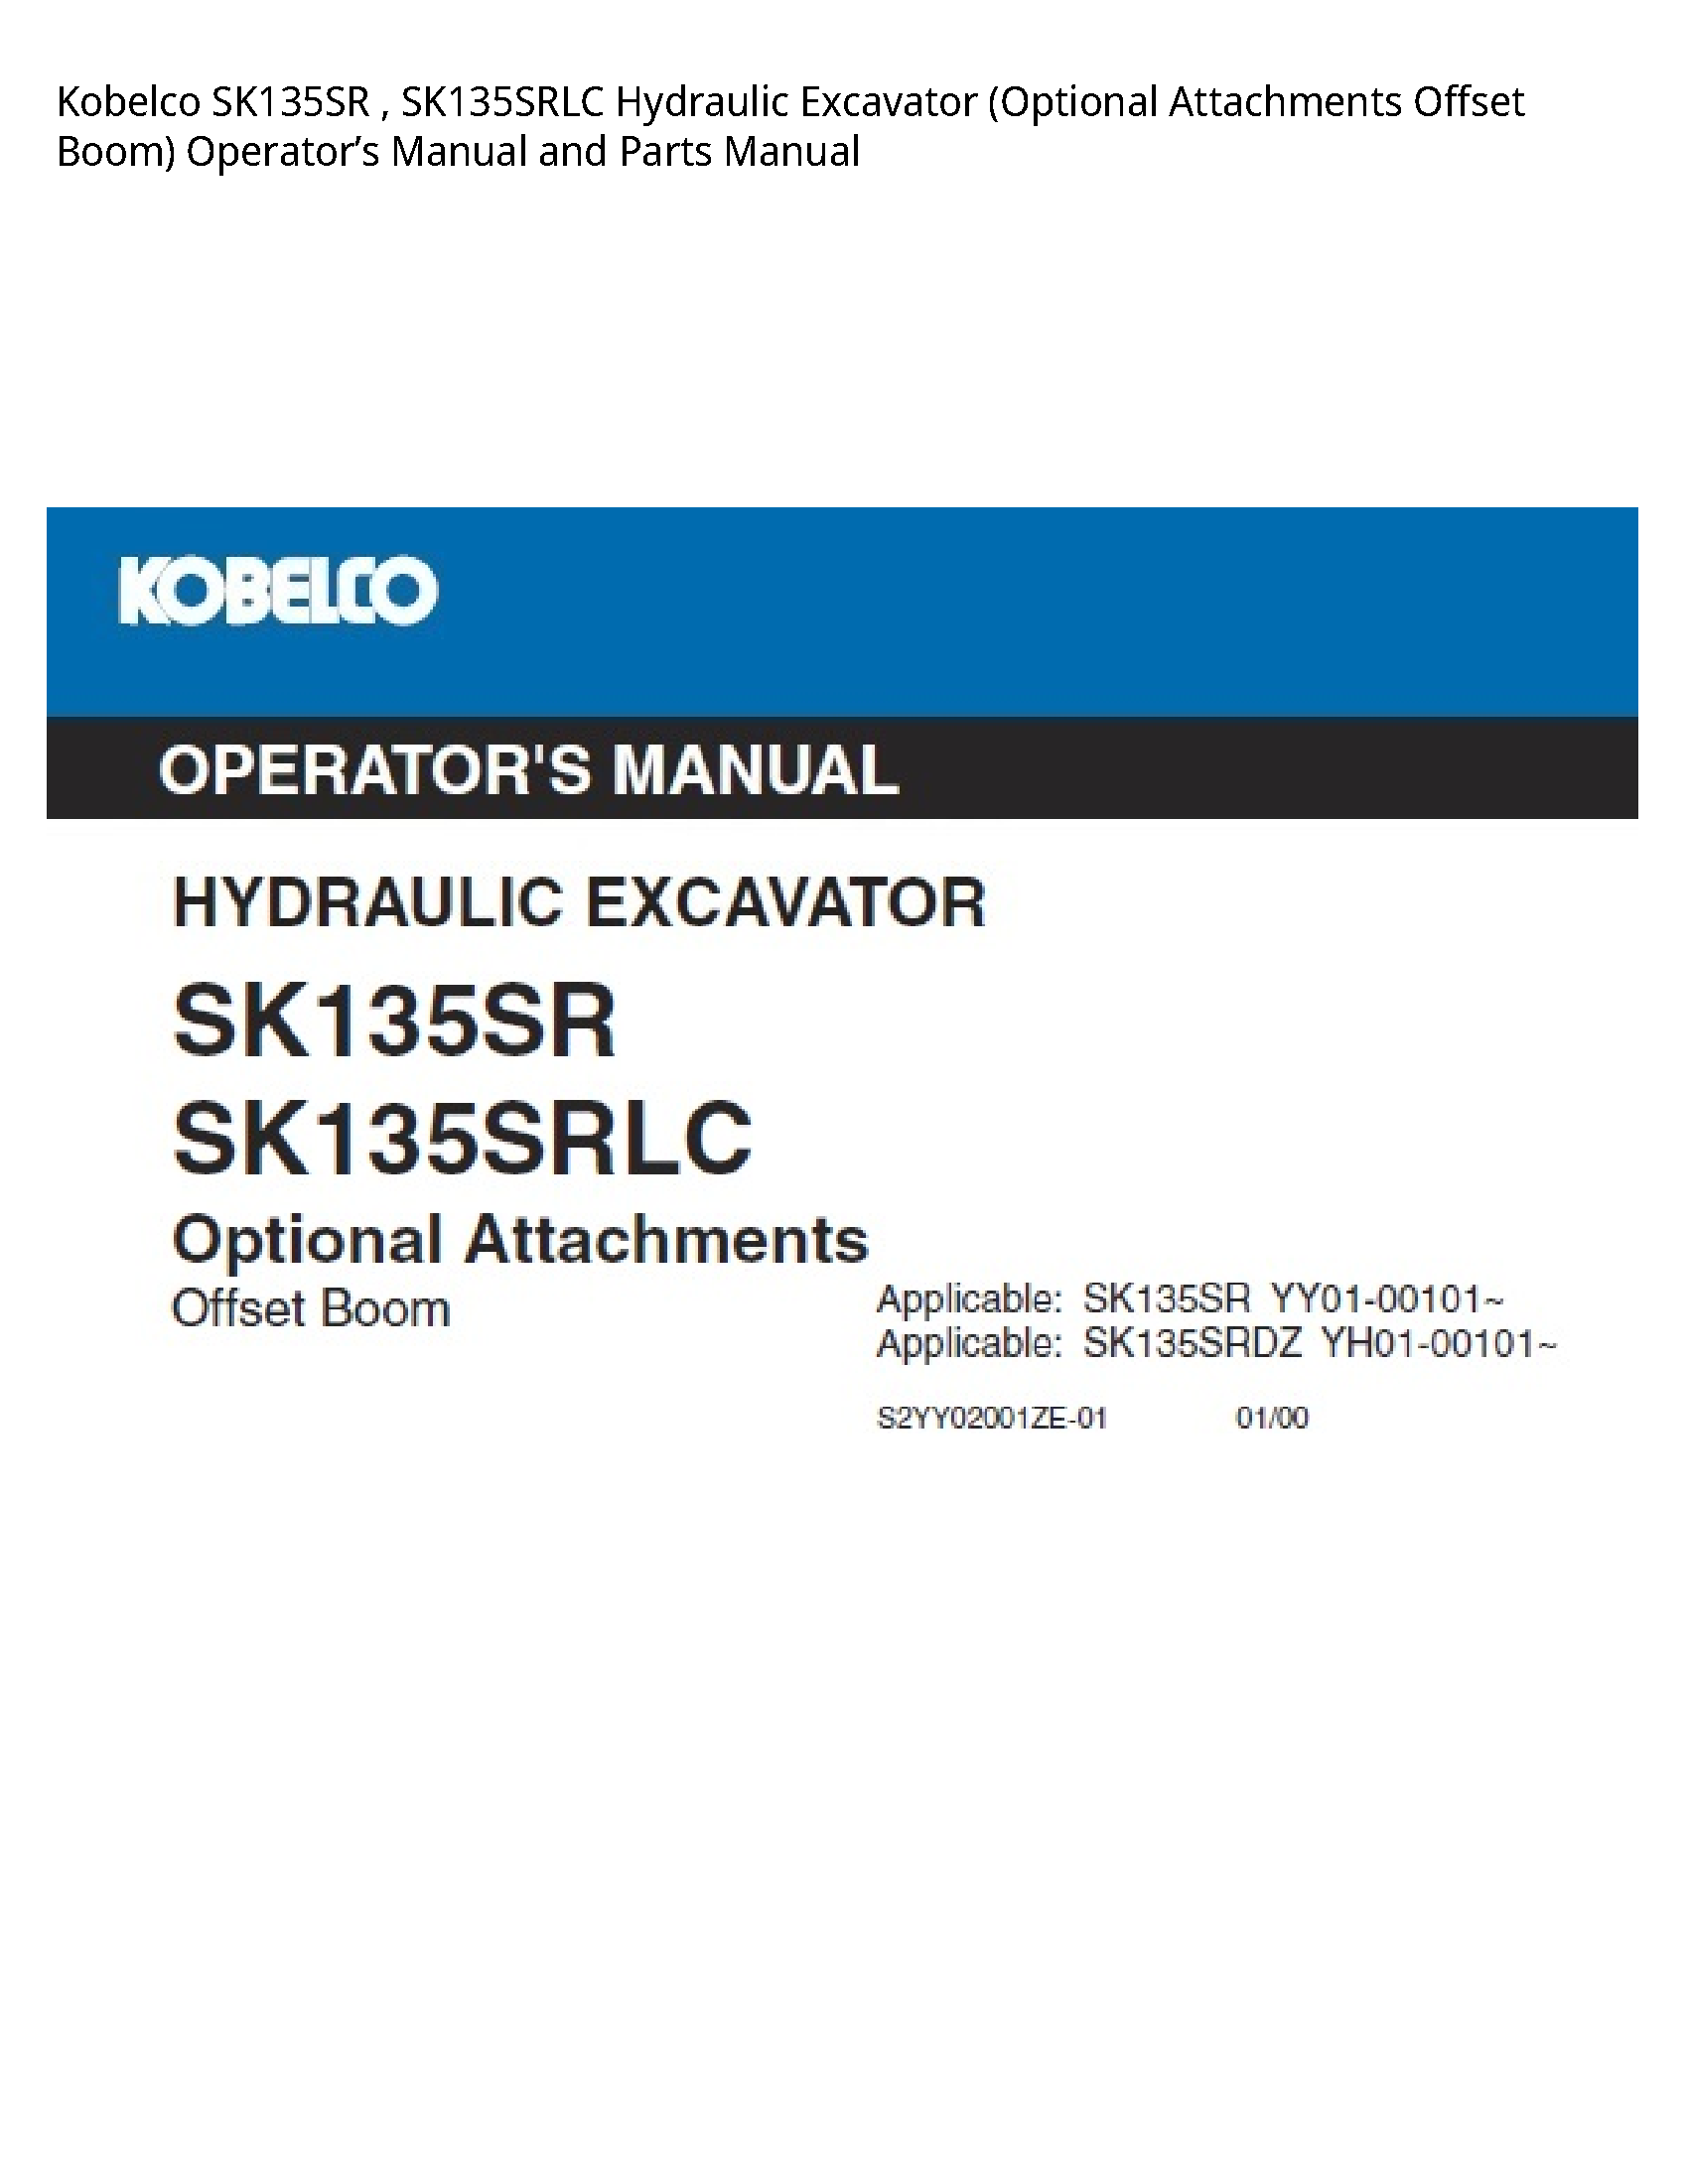 Kobelco SK135SR Hydraulic Excavator (Optional Attachments Offset Boom) Operator’s manual